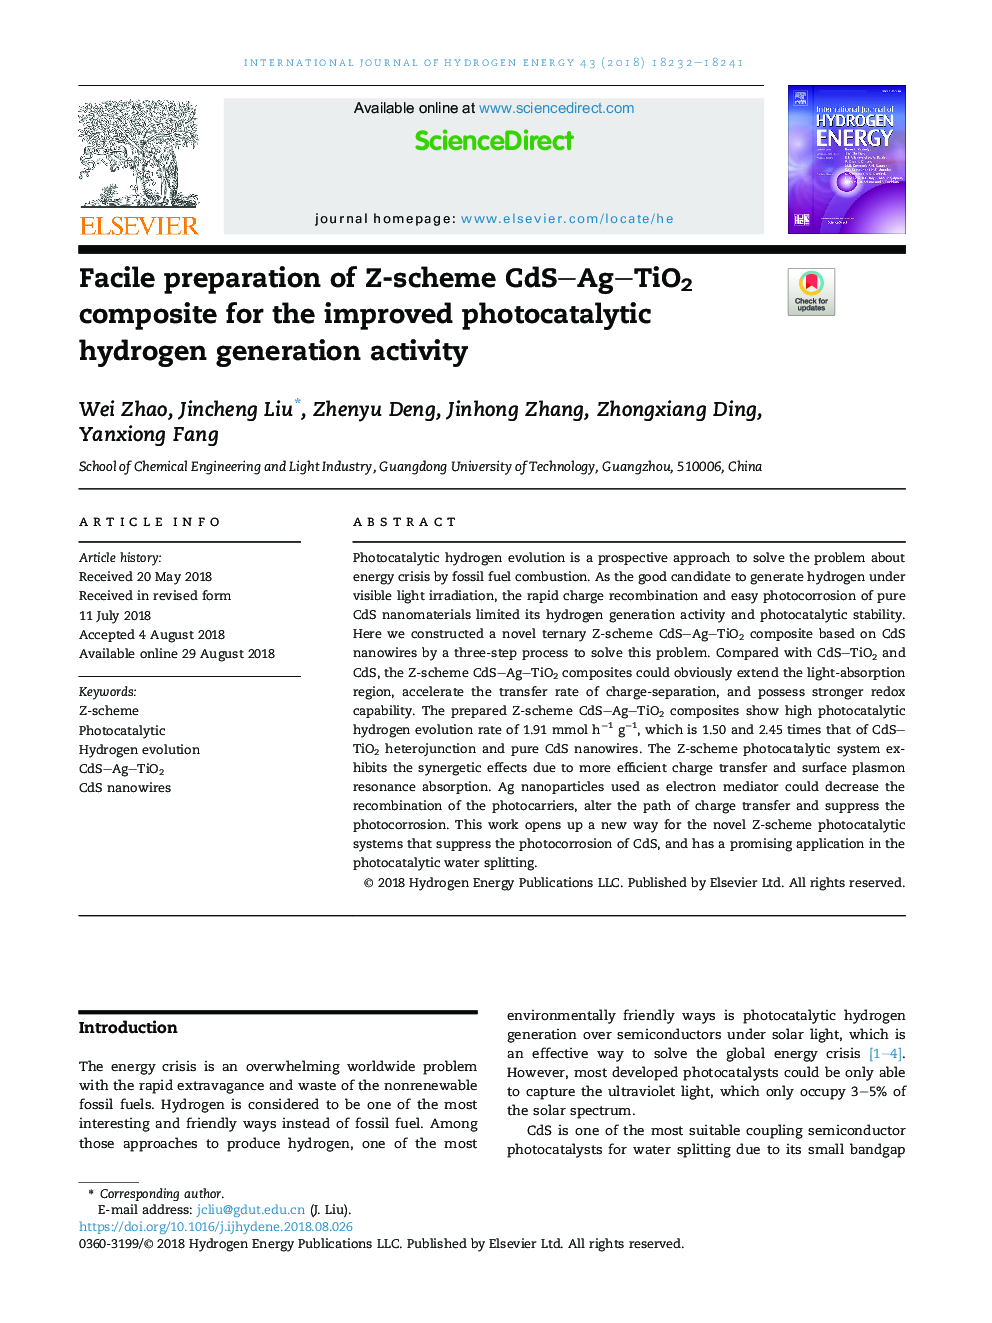 Facile preparation of Z-scheme CdSAgTiO2 composite for the improved photocatalytic hydrogen generation activity